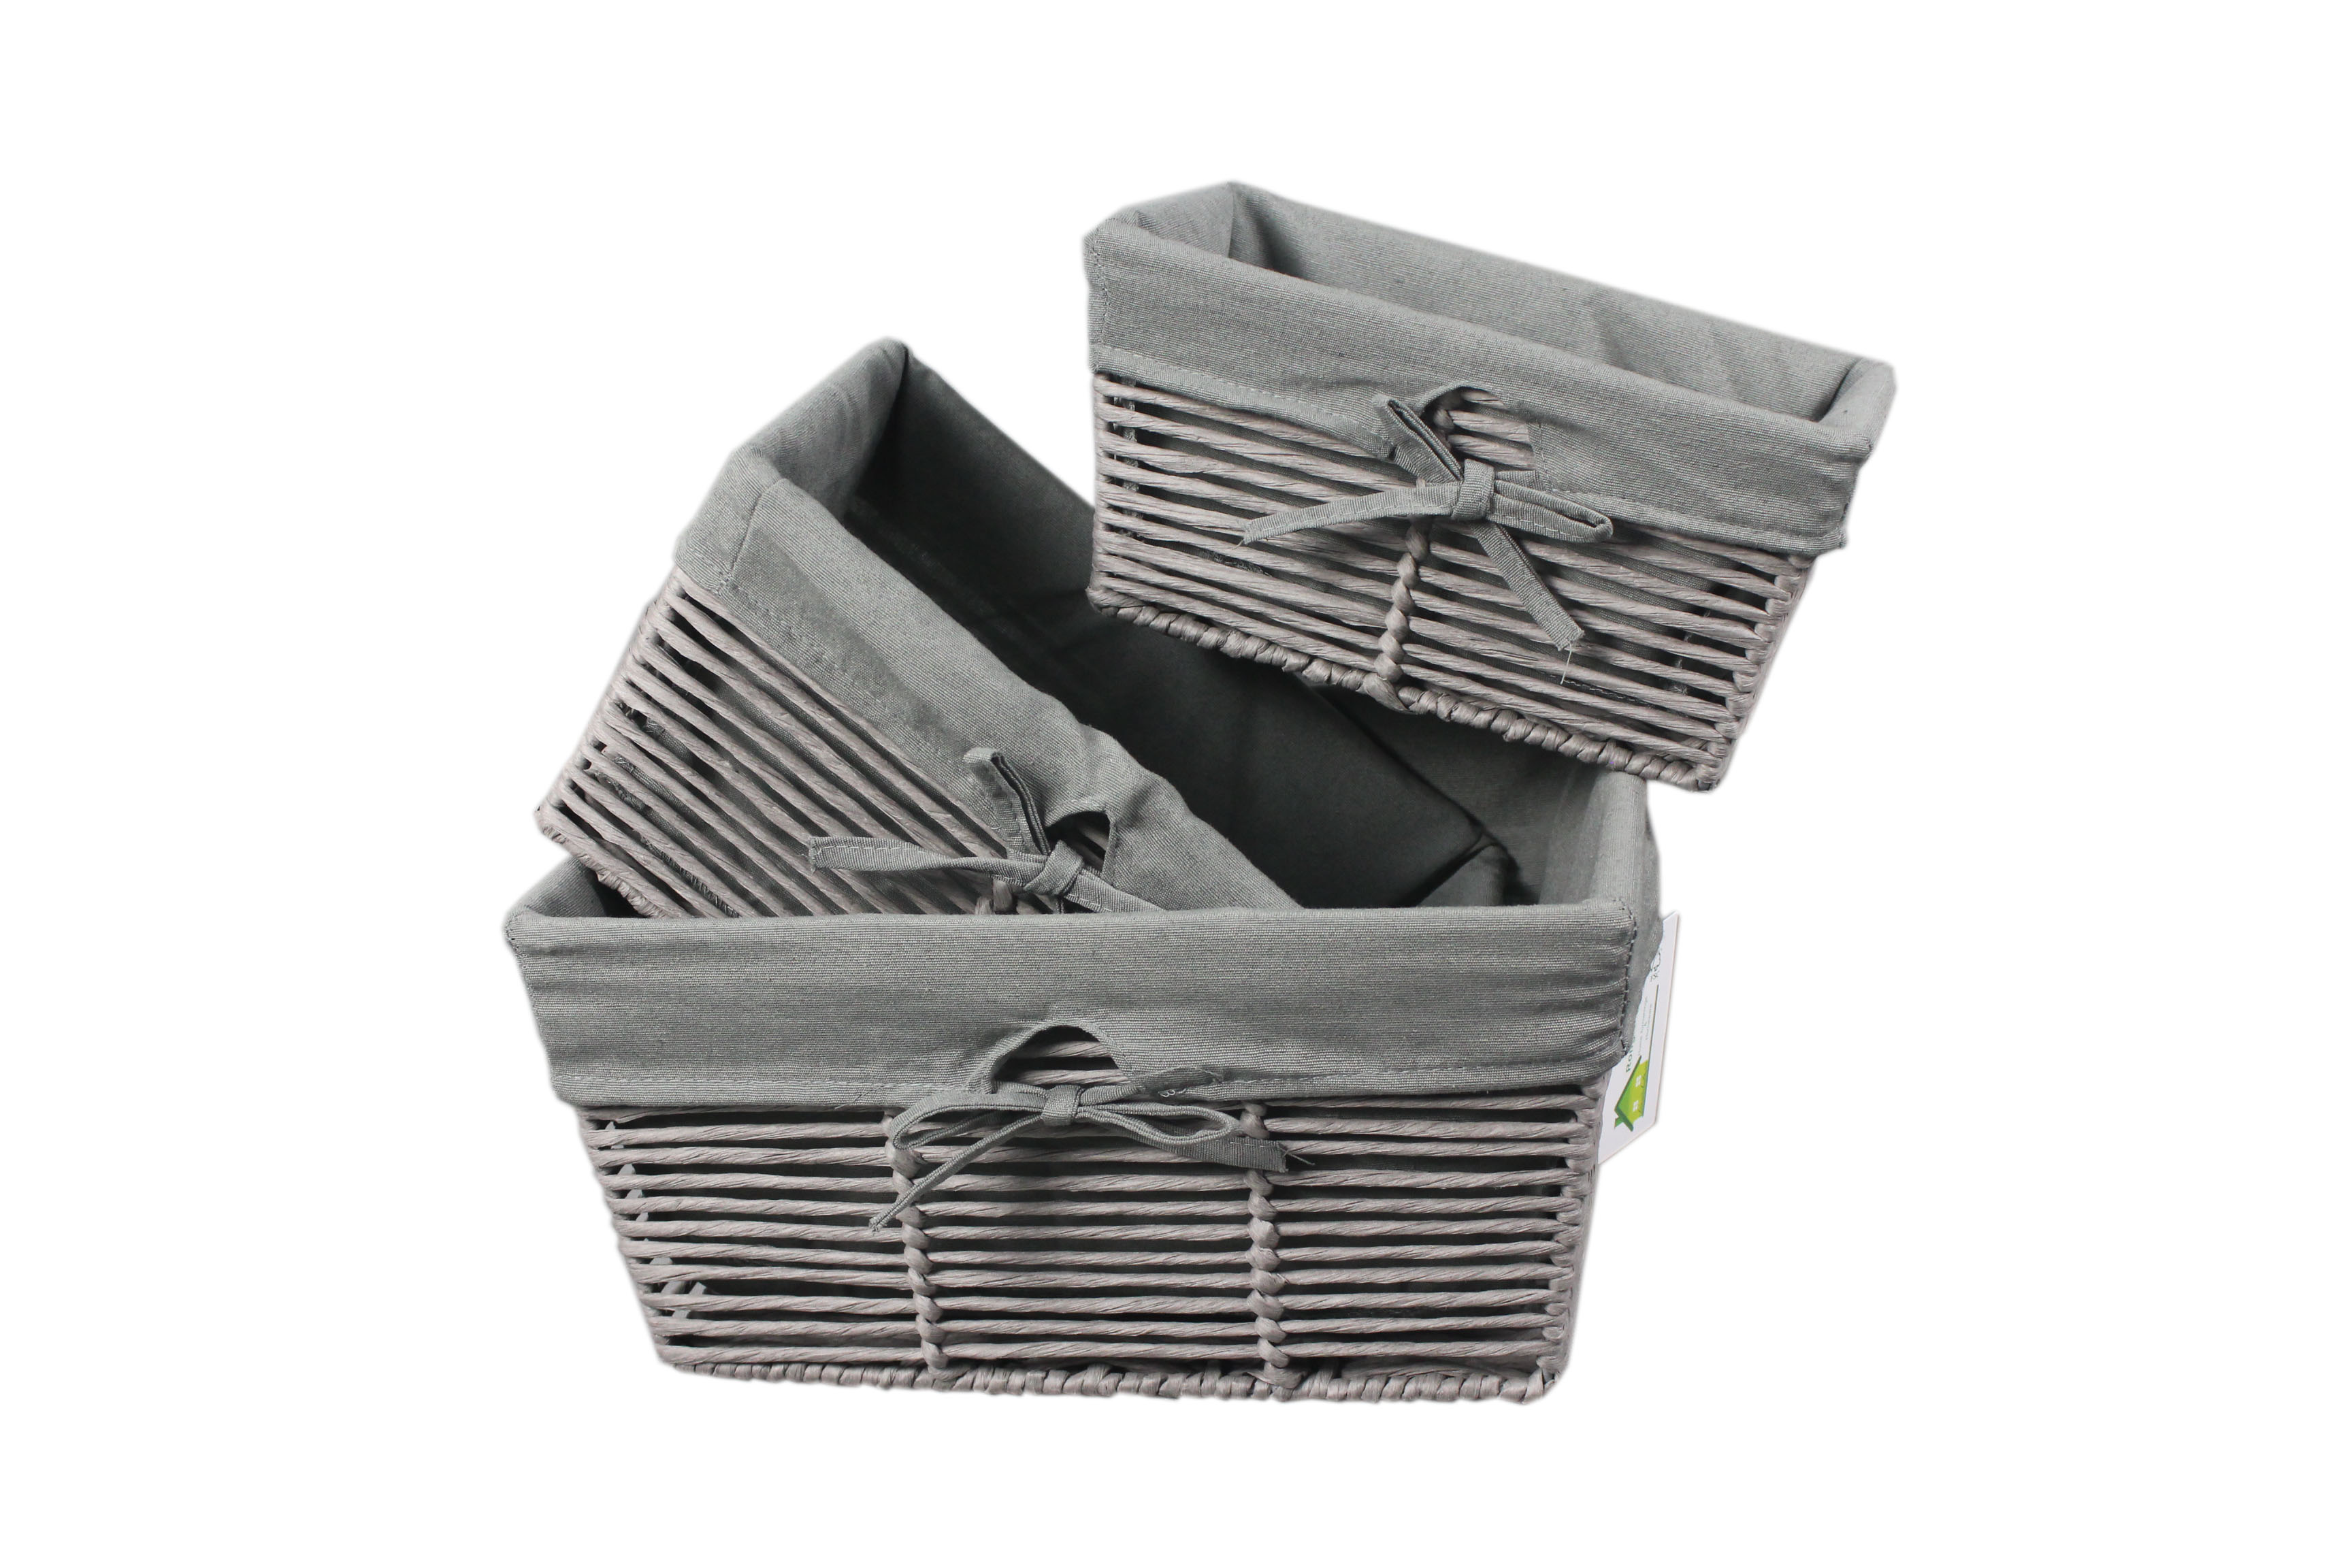 Basket , Laundry basket, Toy storage-4204